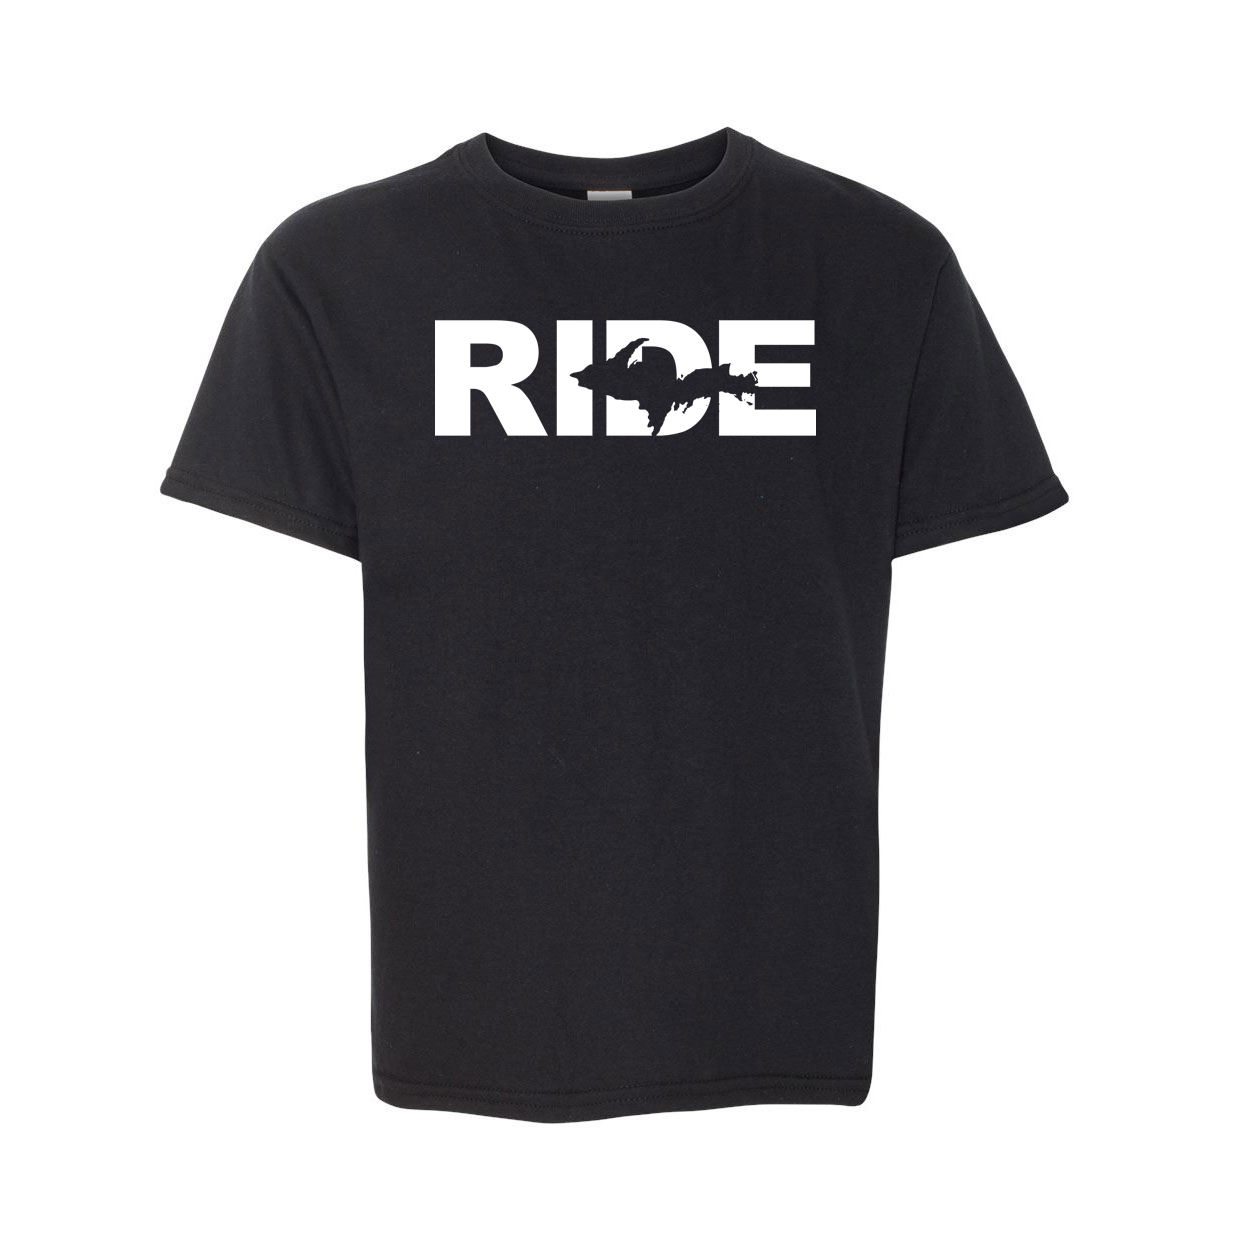 Ride Michigan UP Classic Youth T-Shirt Black (White Logo)